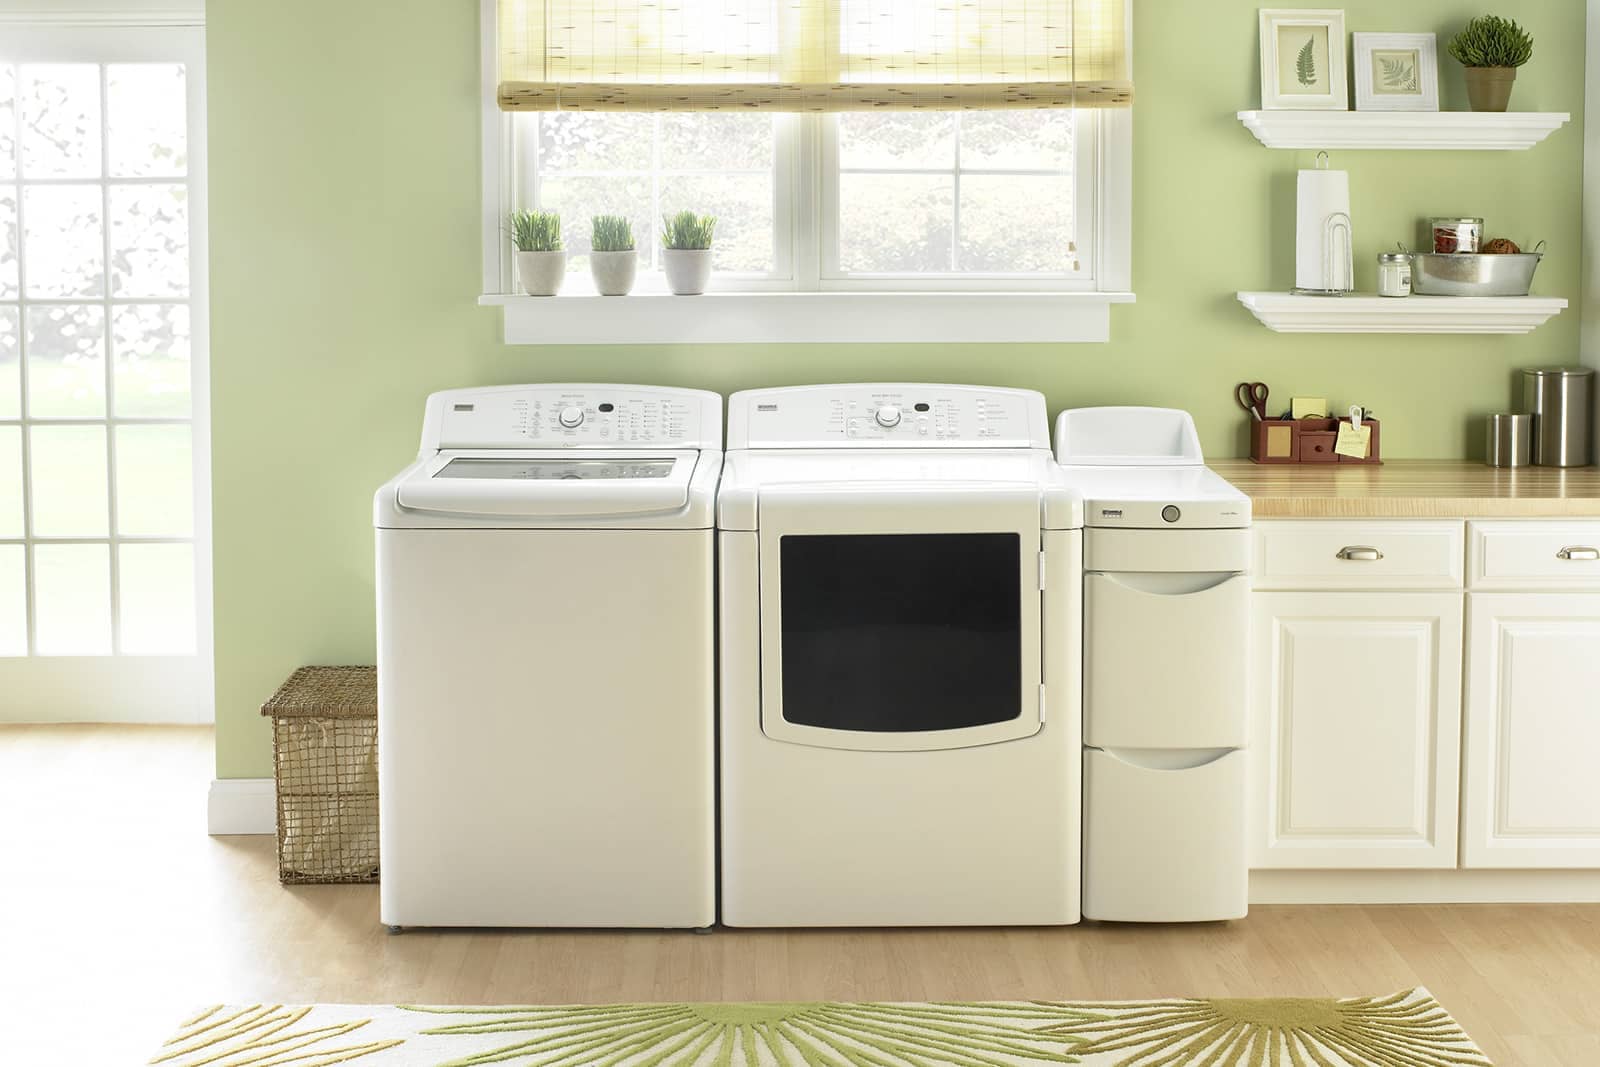 Top Load Washing Machine Not Draining: 7 Ways To Fix It